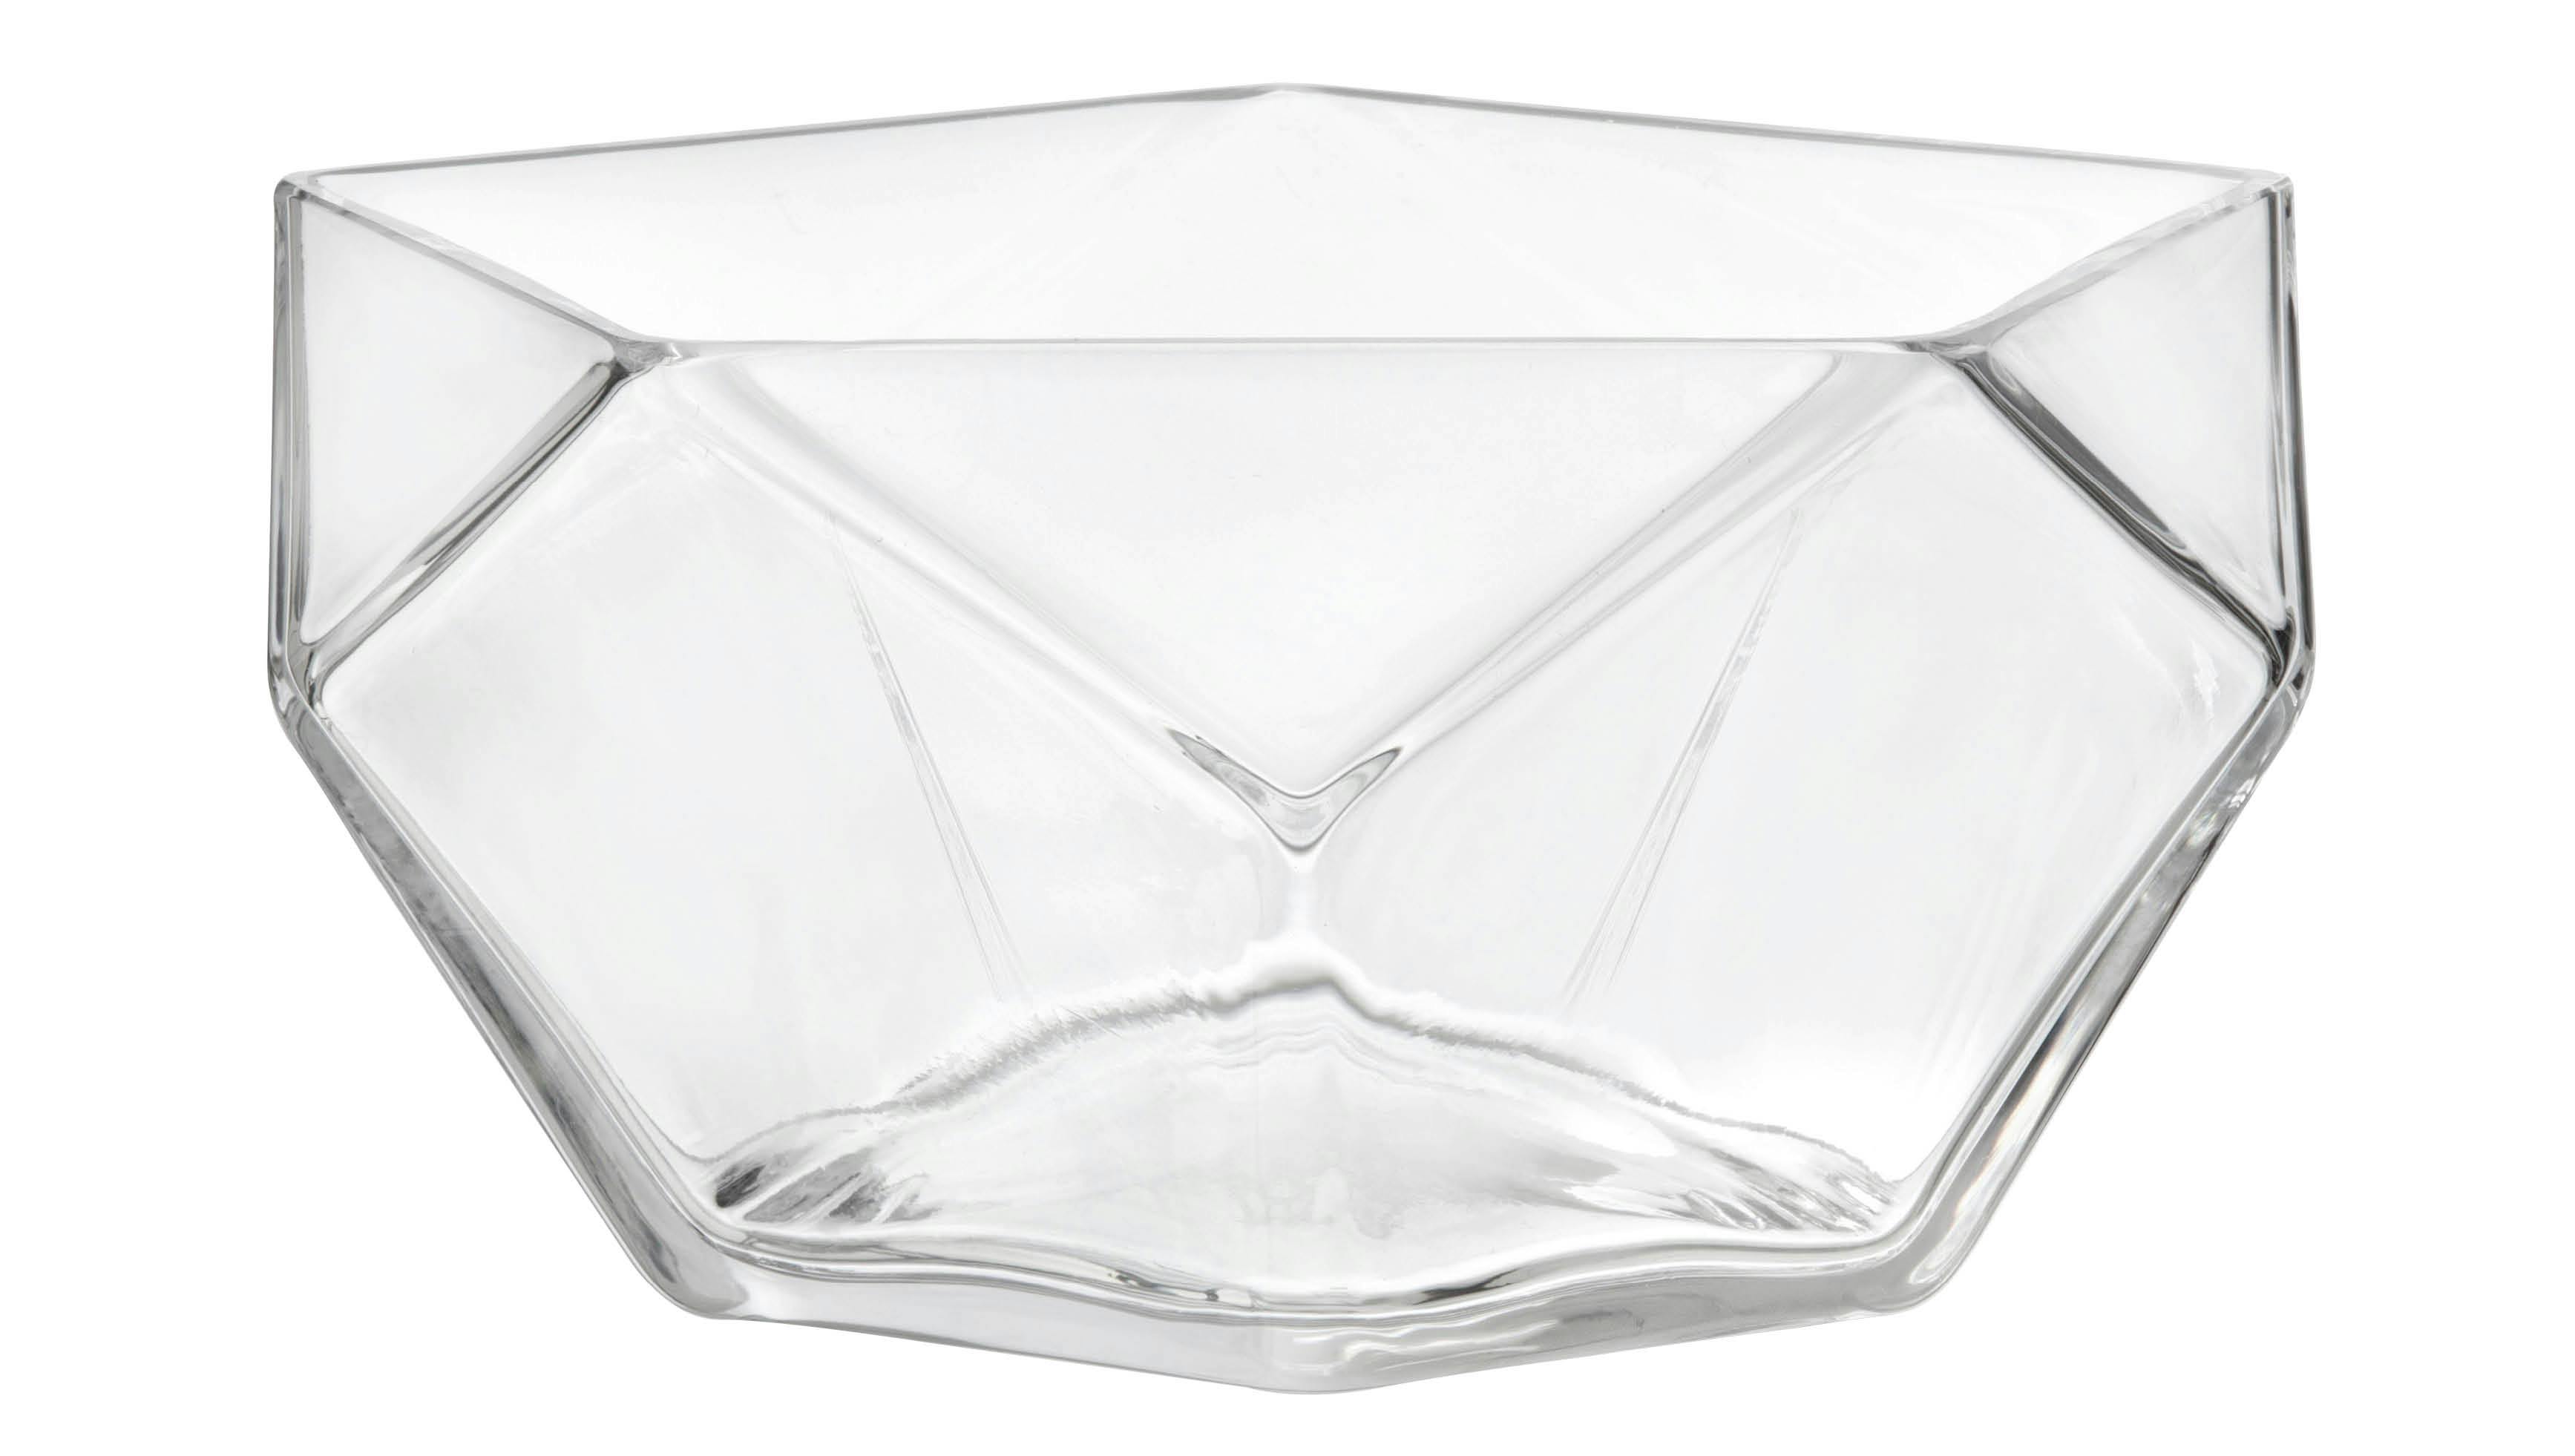 Glasskål fra Rosendahl til borddækning